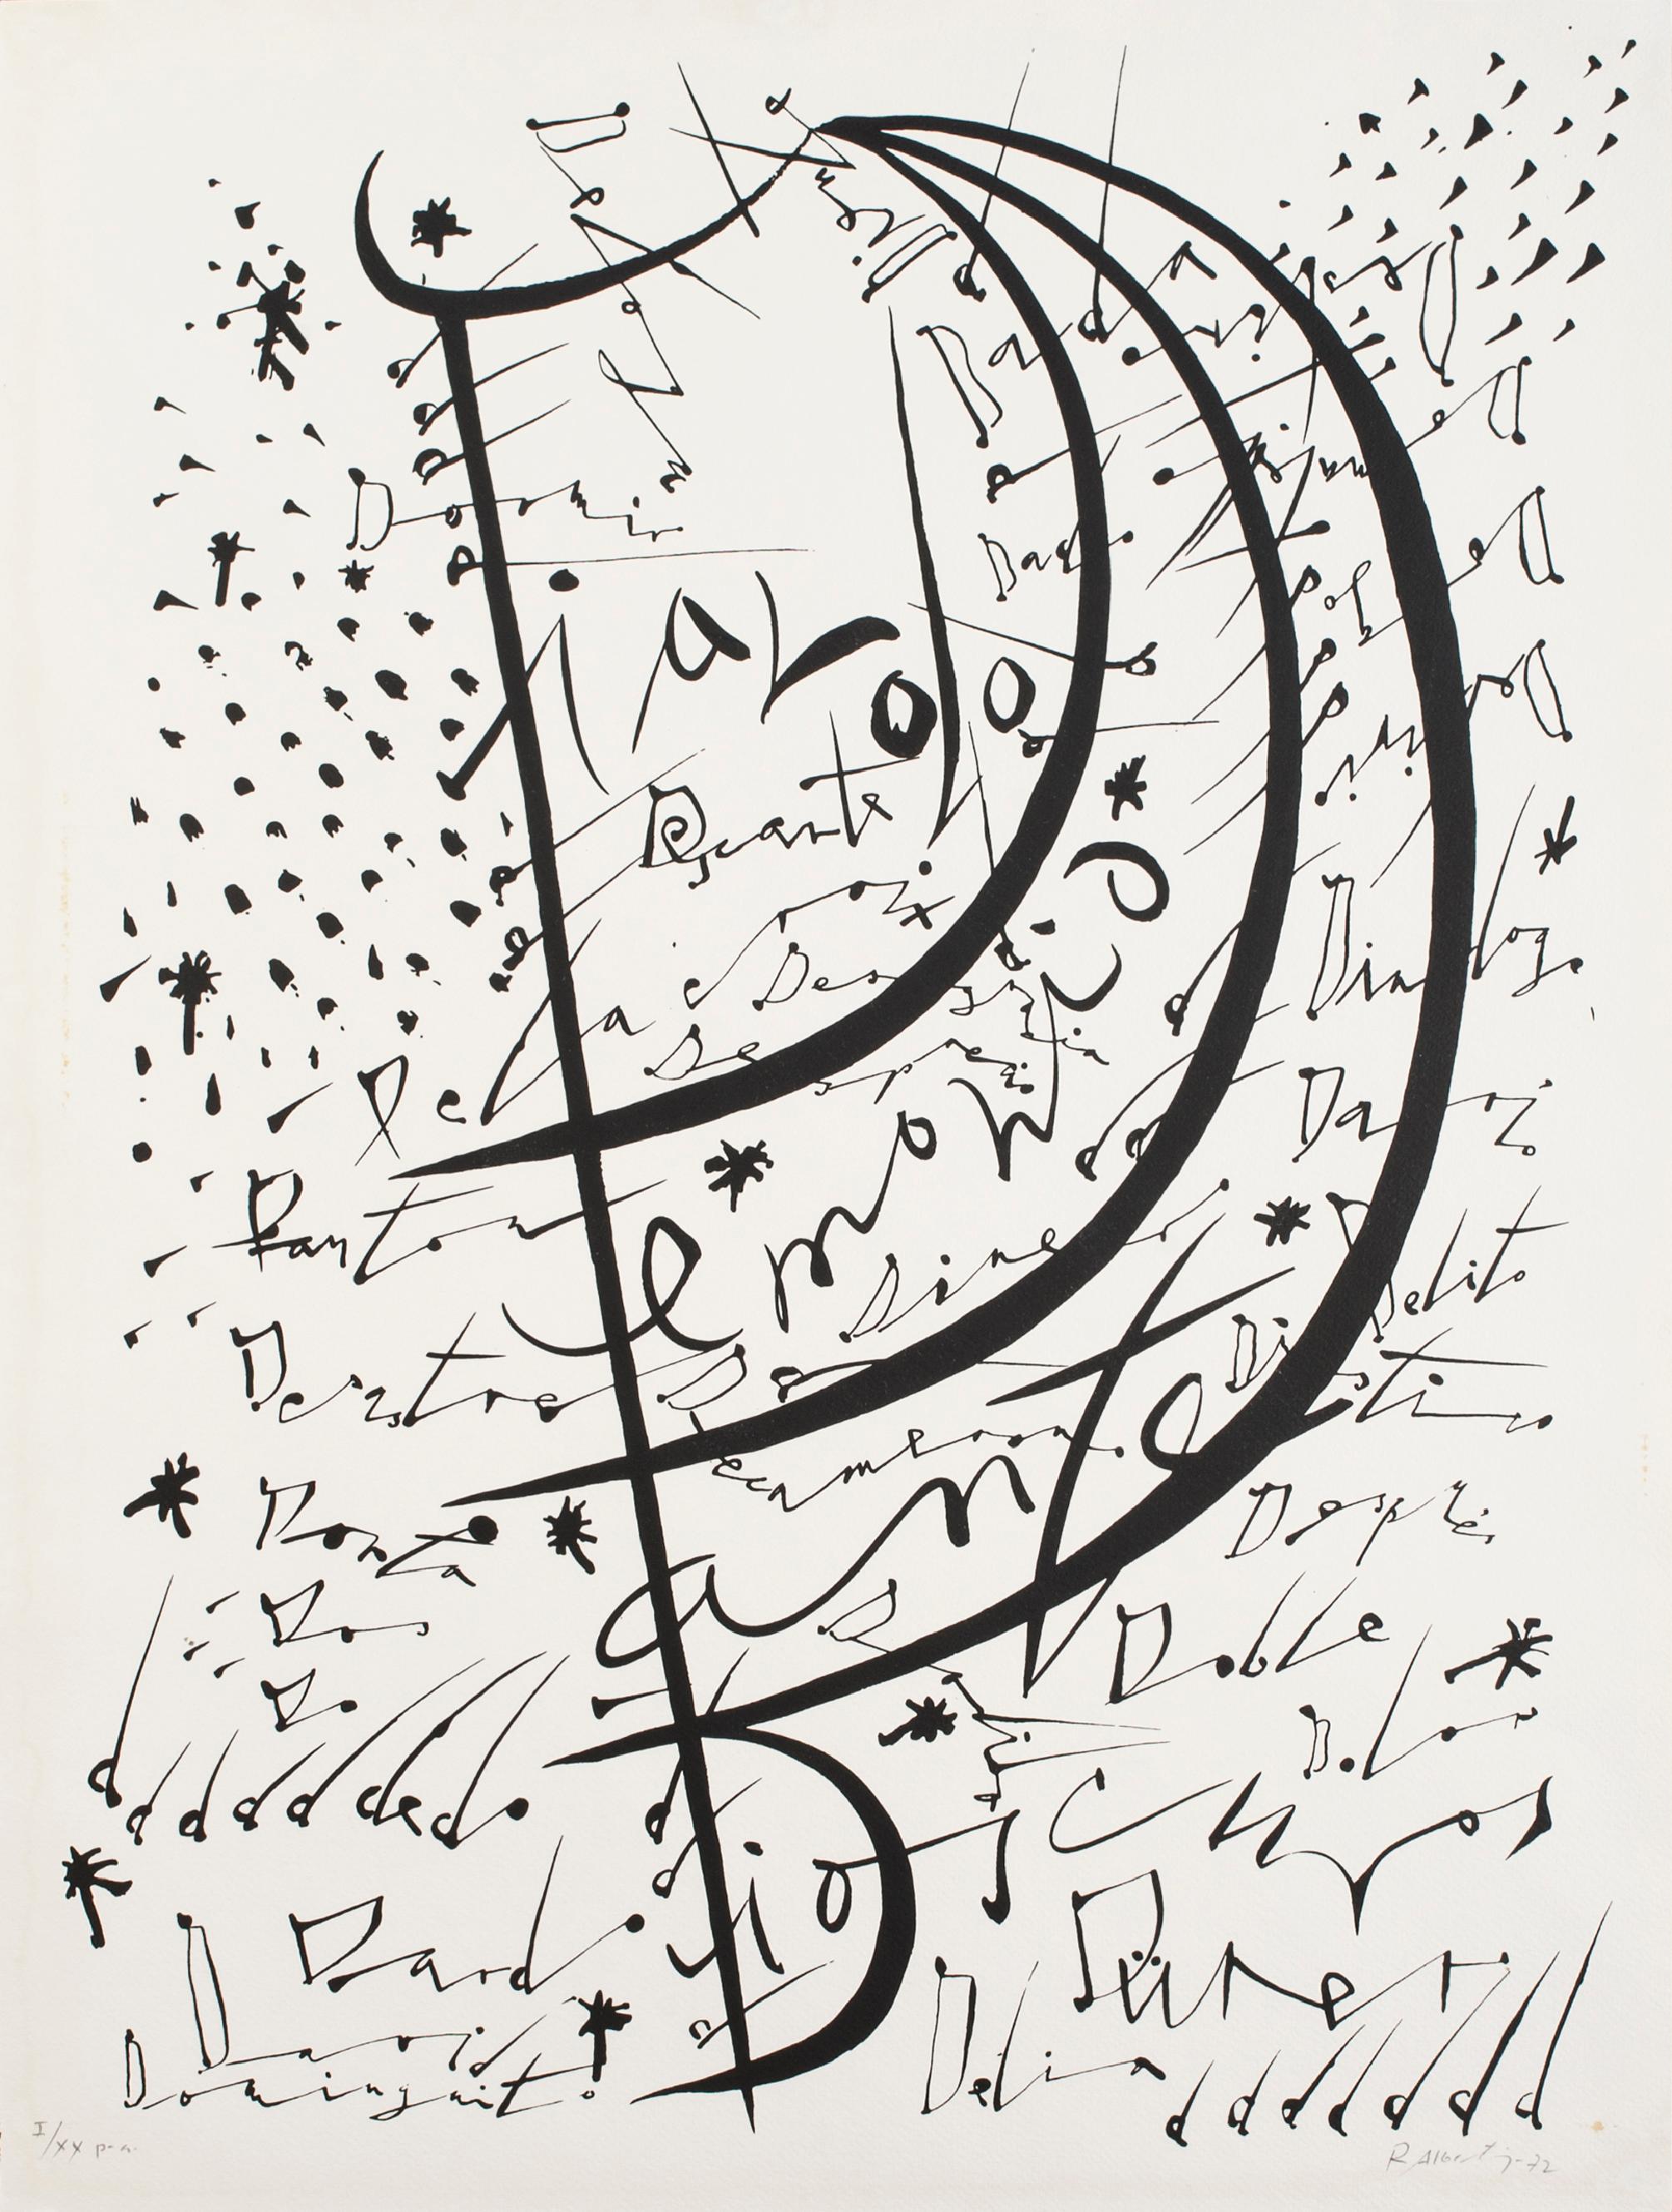 Rafael Alberti Abstract Print - Letter D - Original Lithograph by Raphael Alberti - 1972